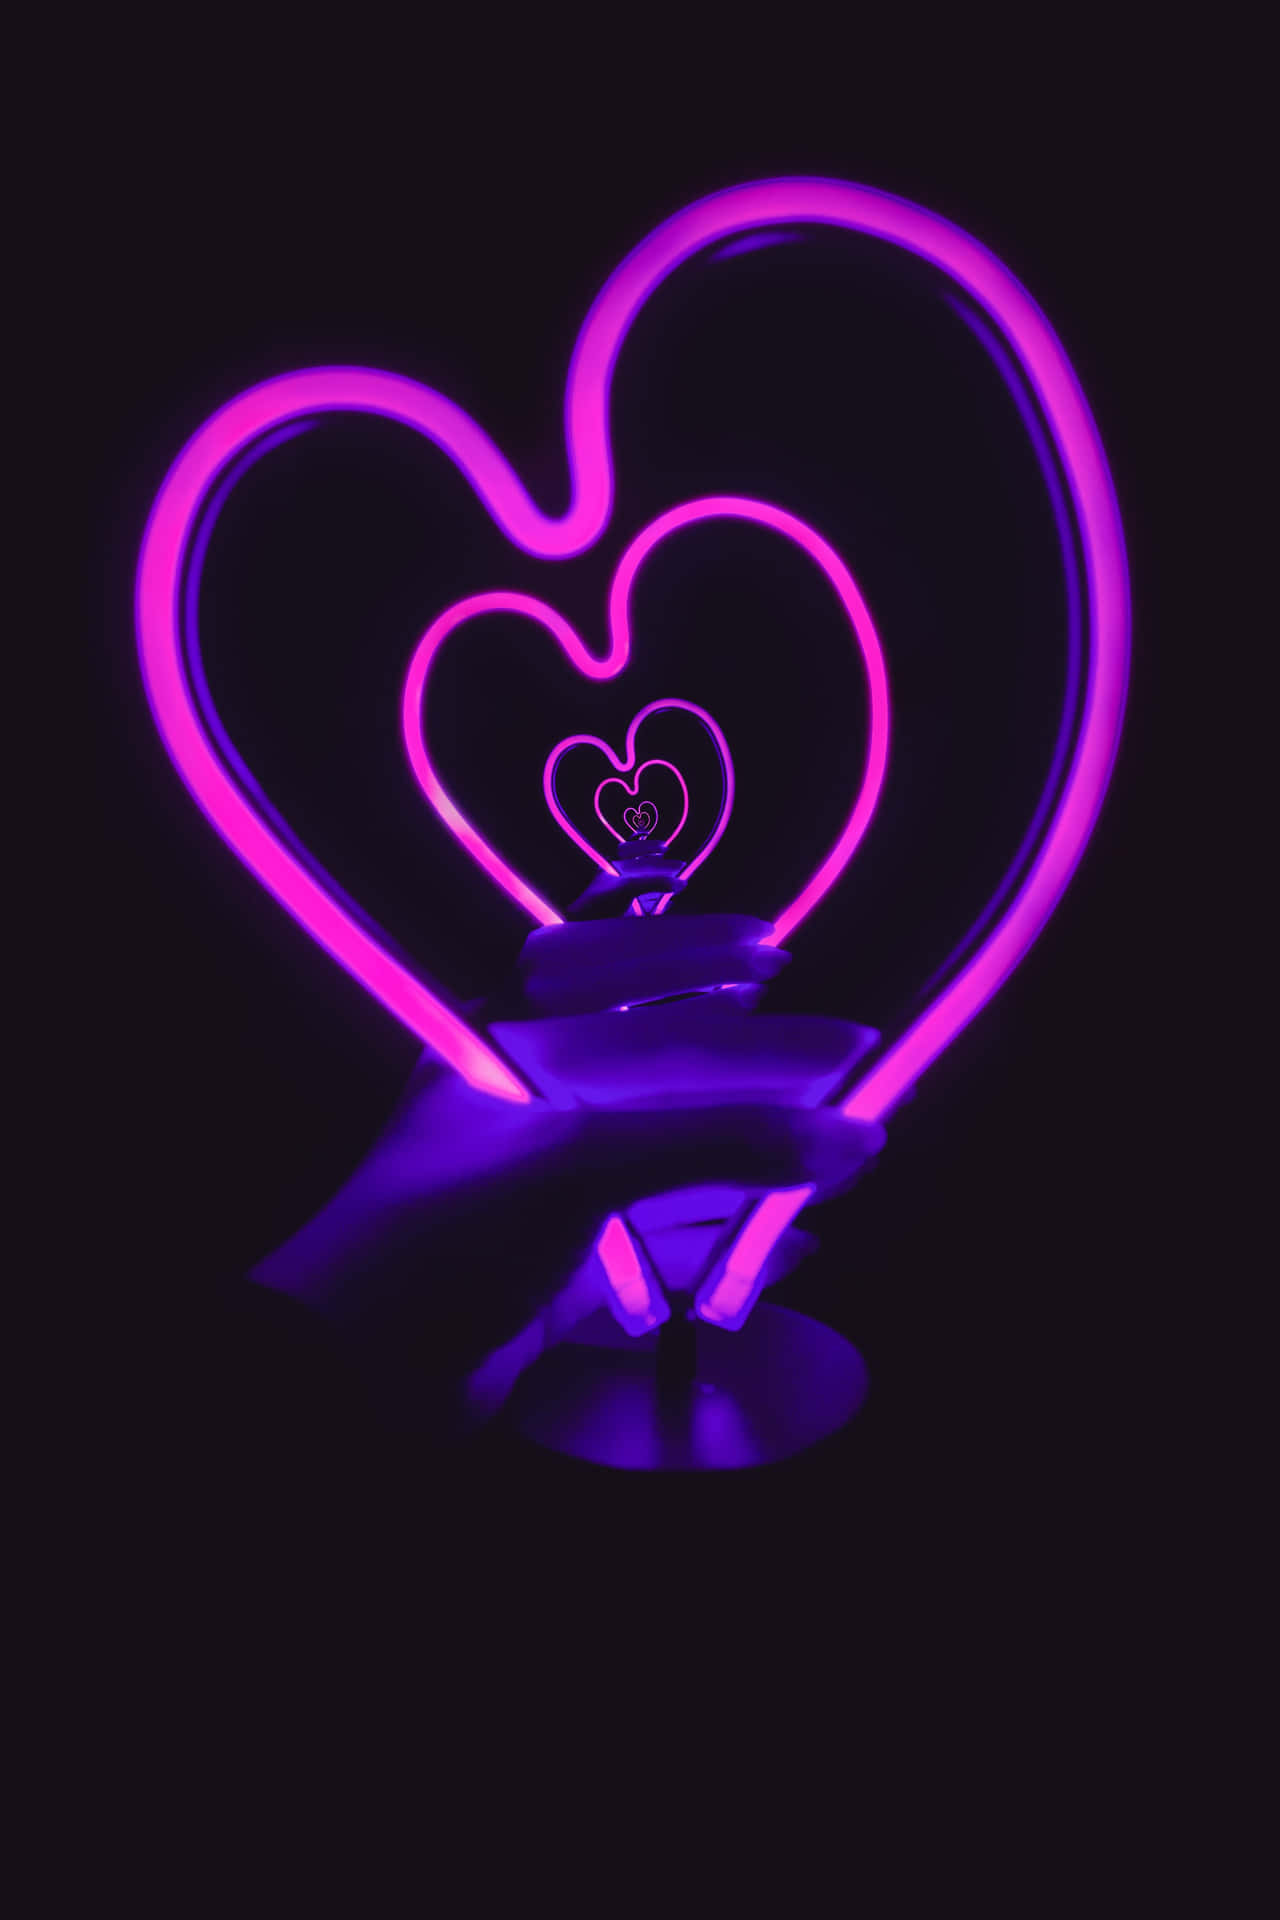 A Purple Heart Shaped Light Up Lamp